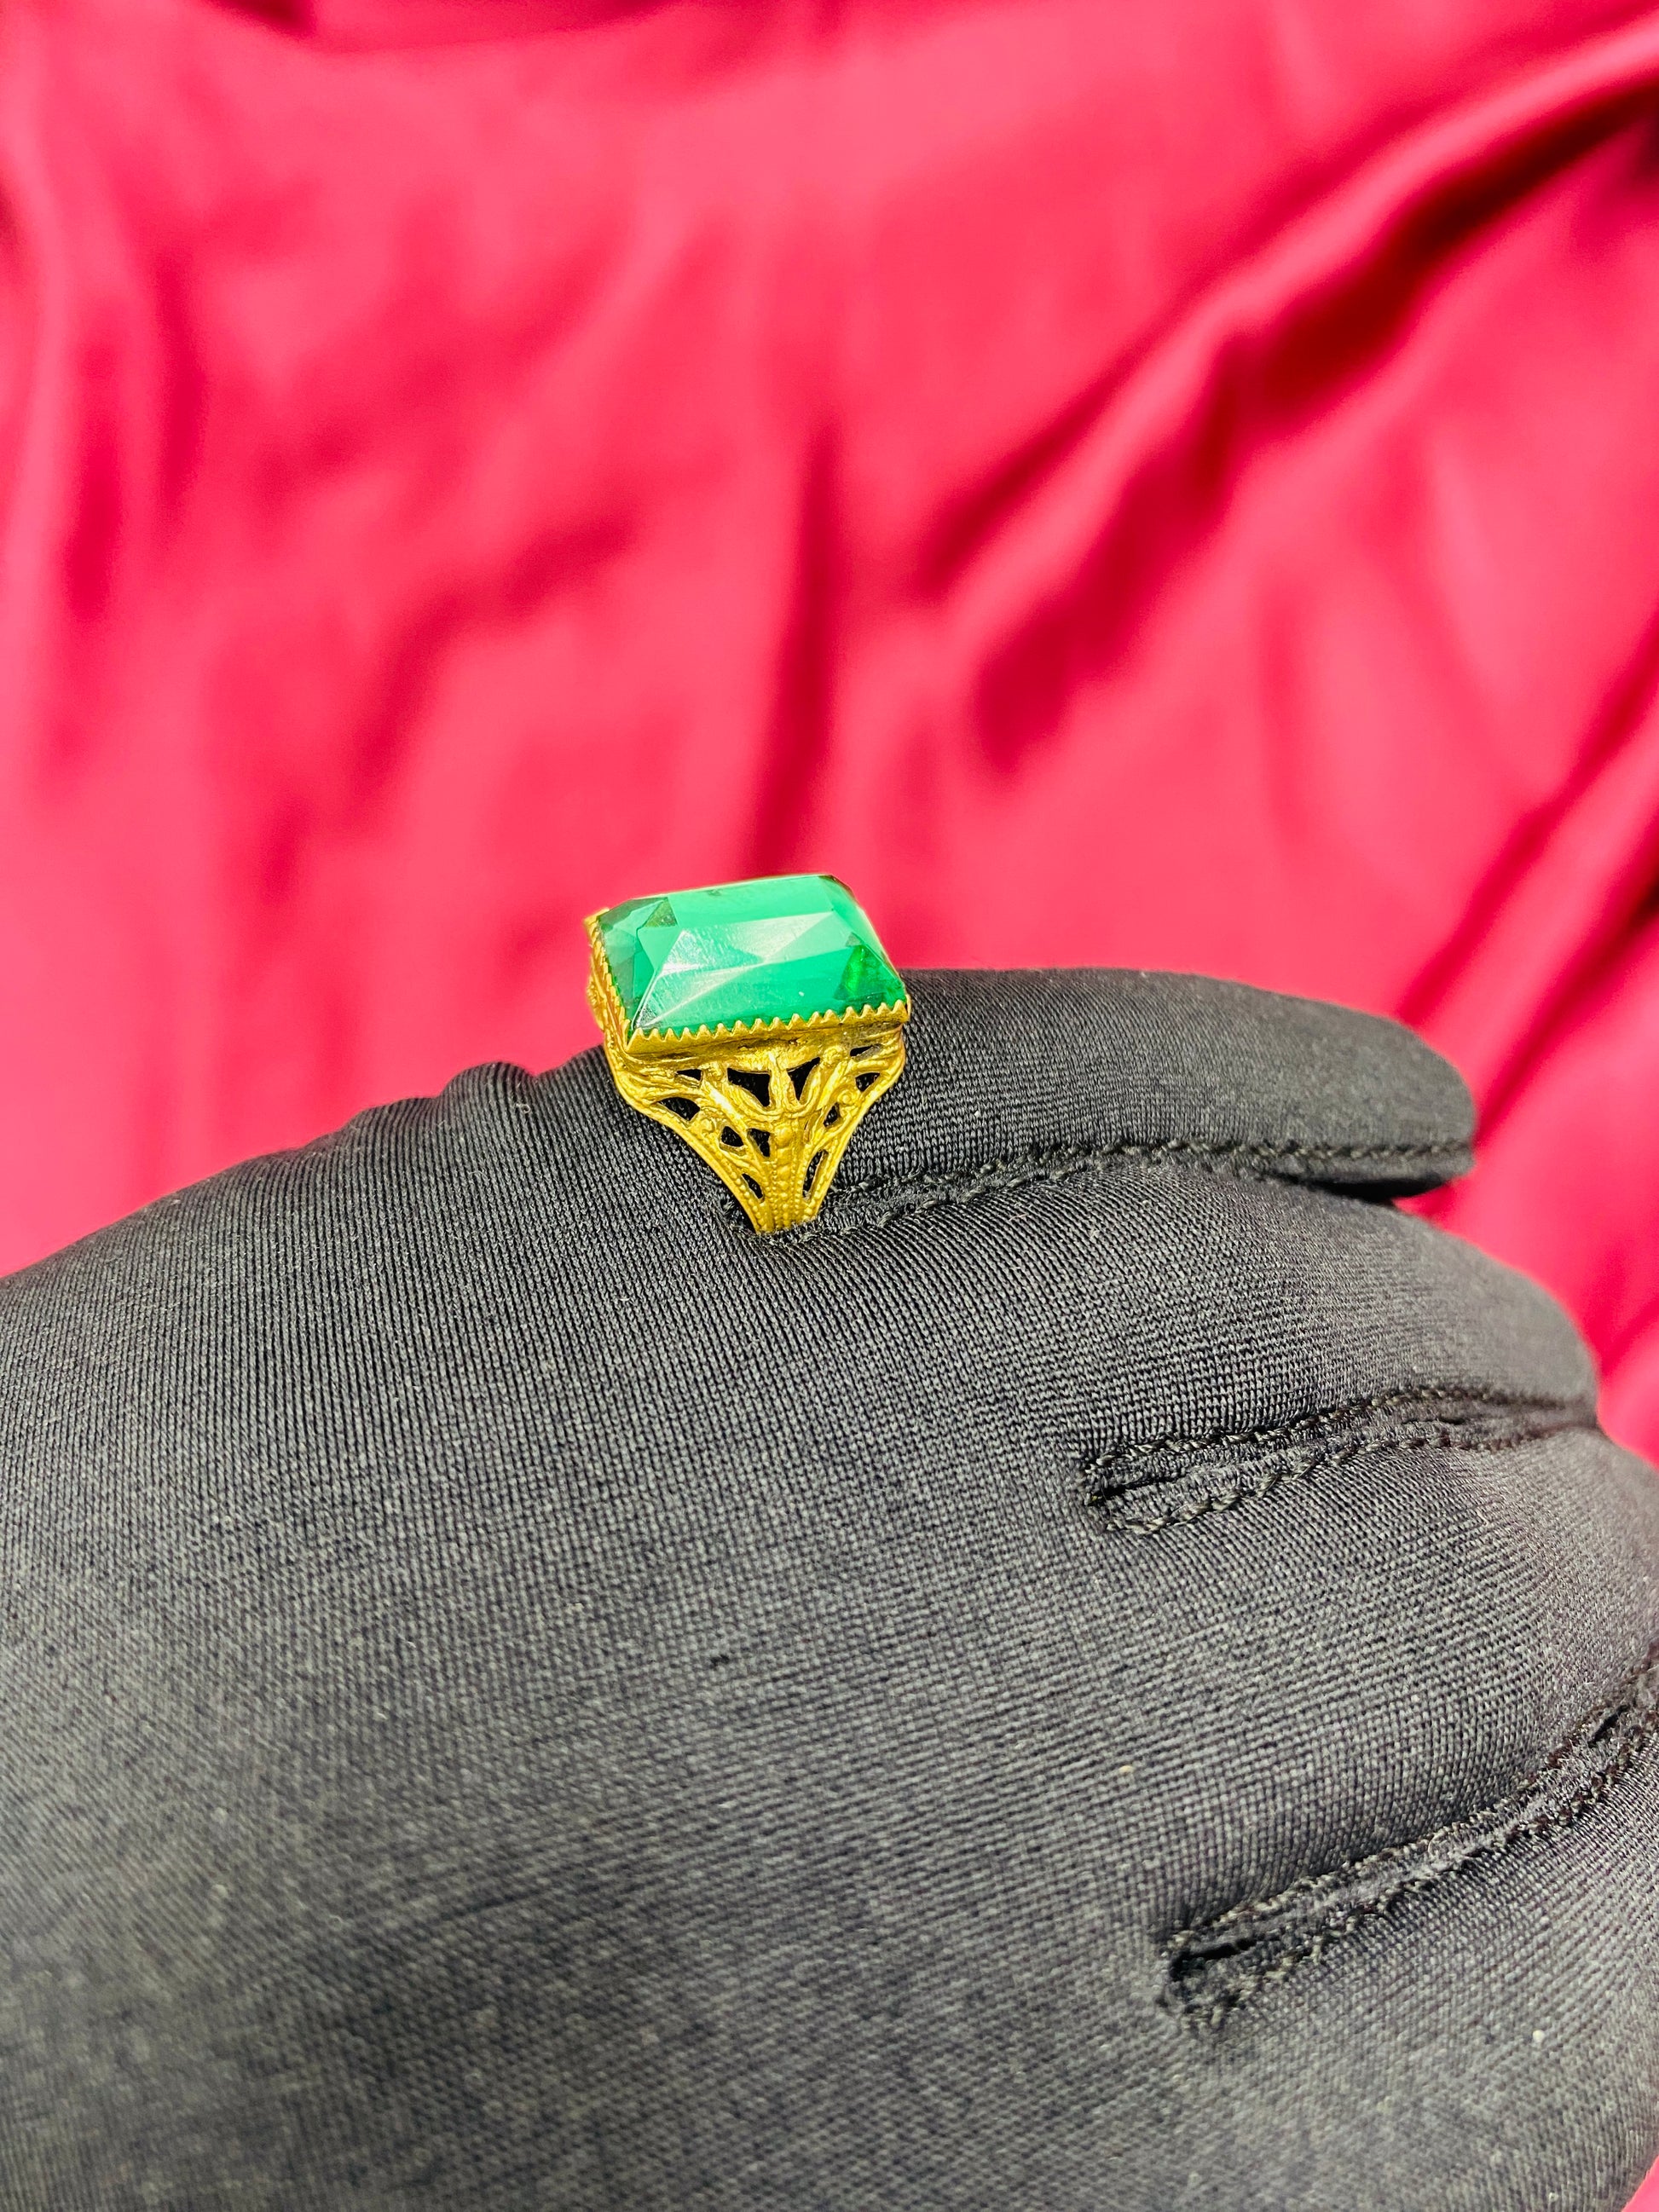 Antique Victorian Green Emerald-Cut Glass Filigree Ring, Size 6